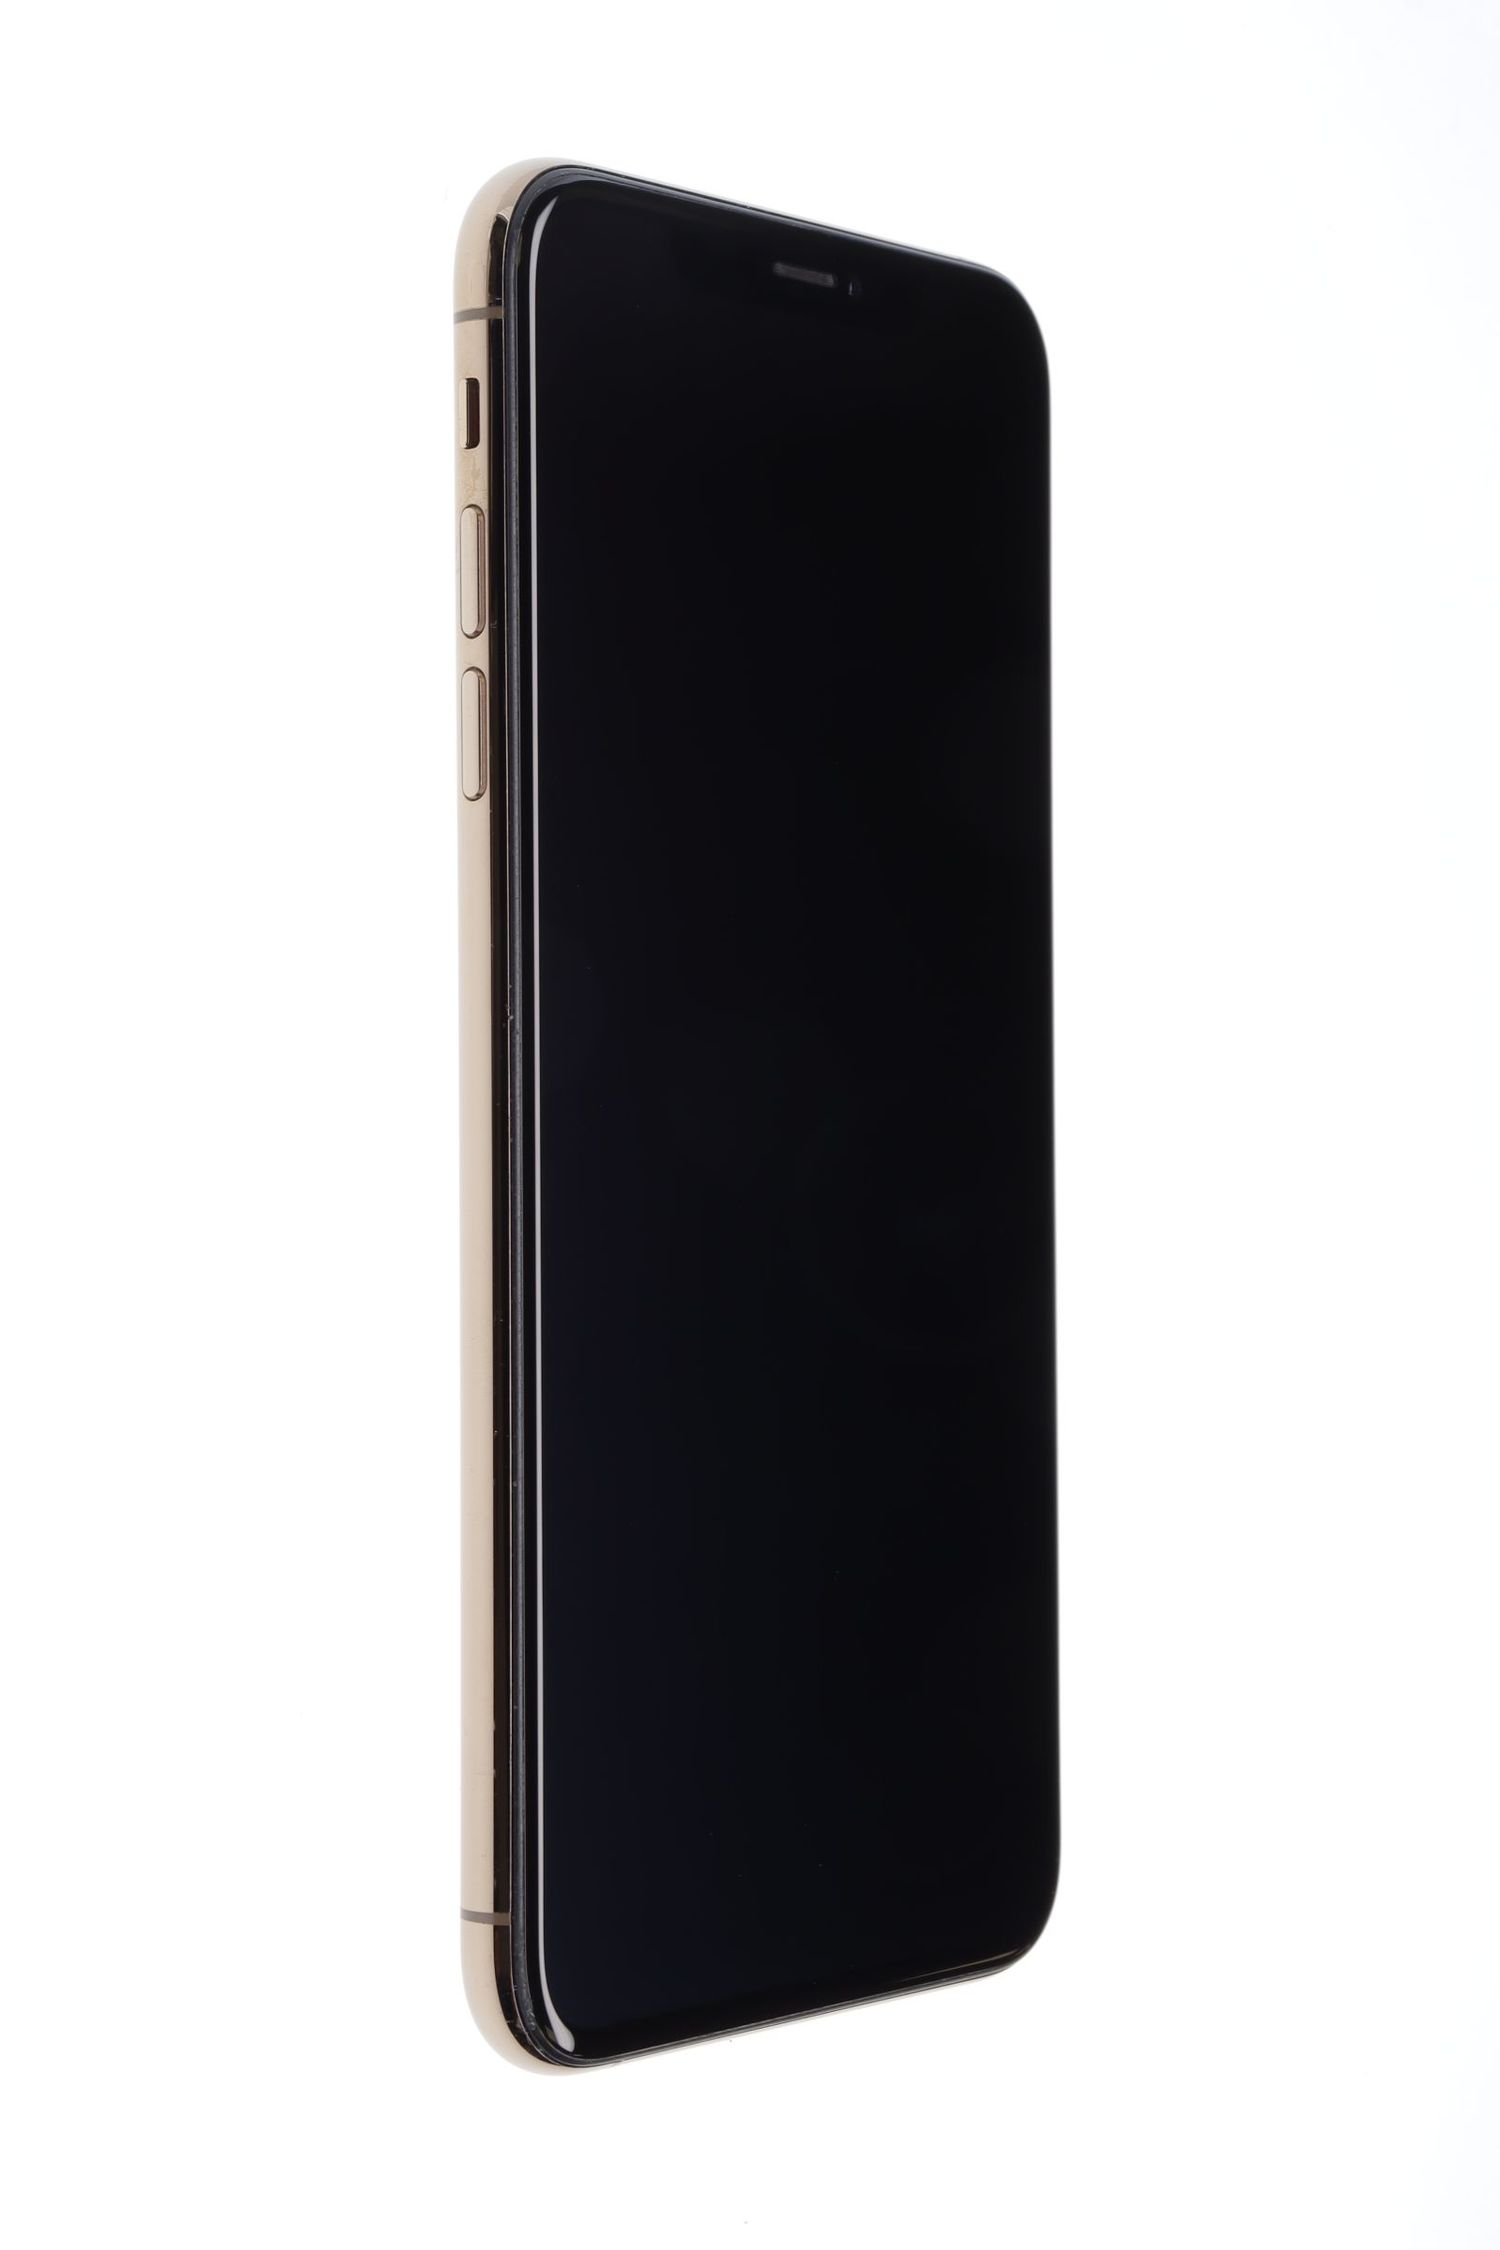 Telefon mobil Apple iPhone XS Max, Gold, 256 GB, Excelent